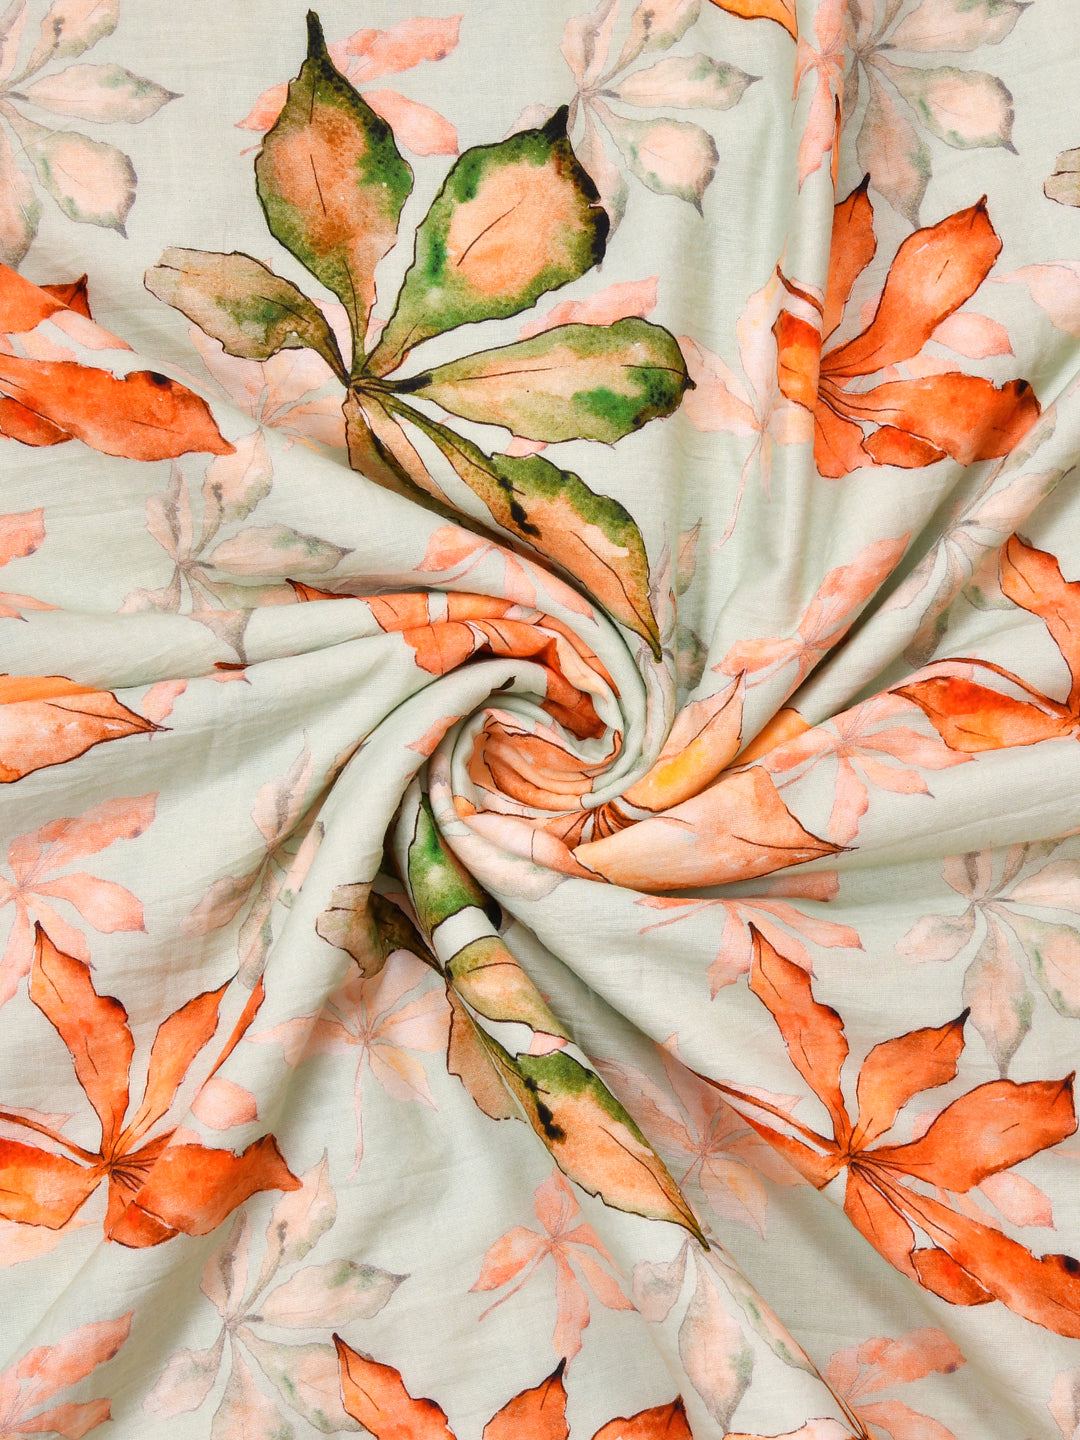 Green and Orange Floral Print Reversible Cotton Dohar